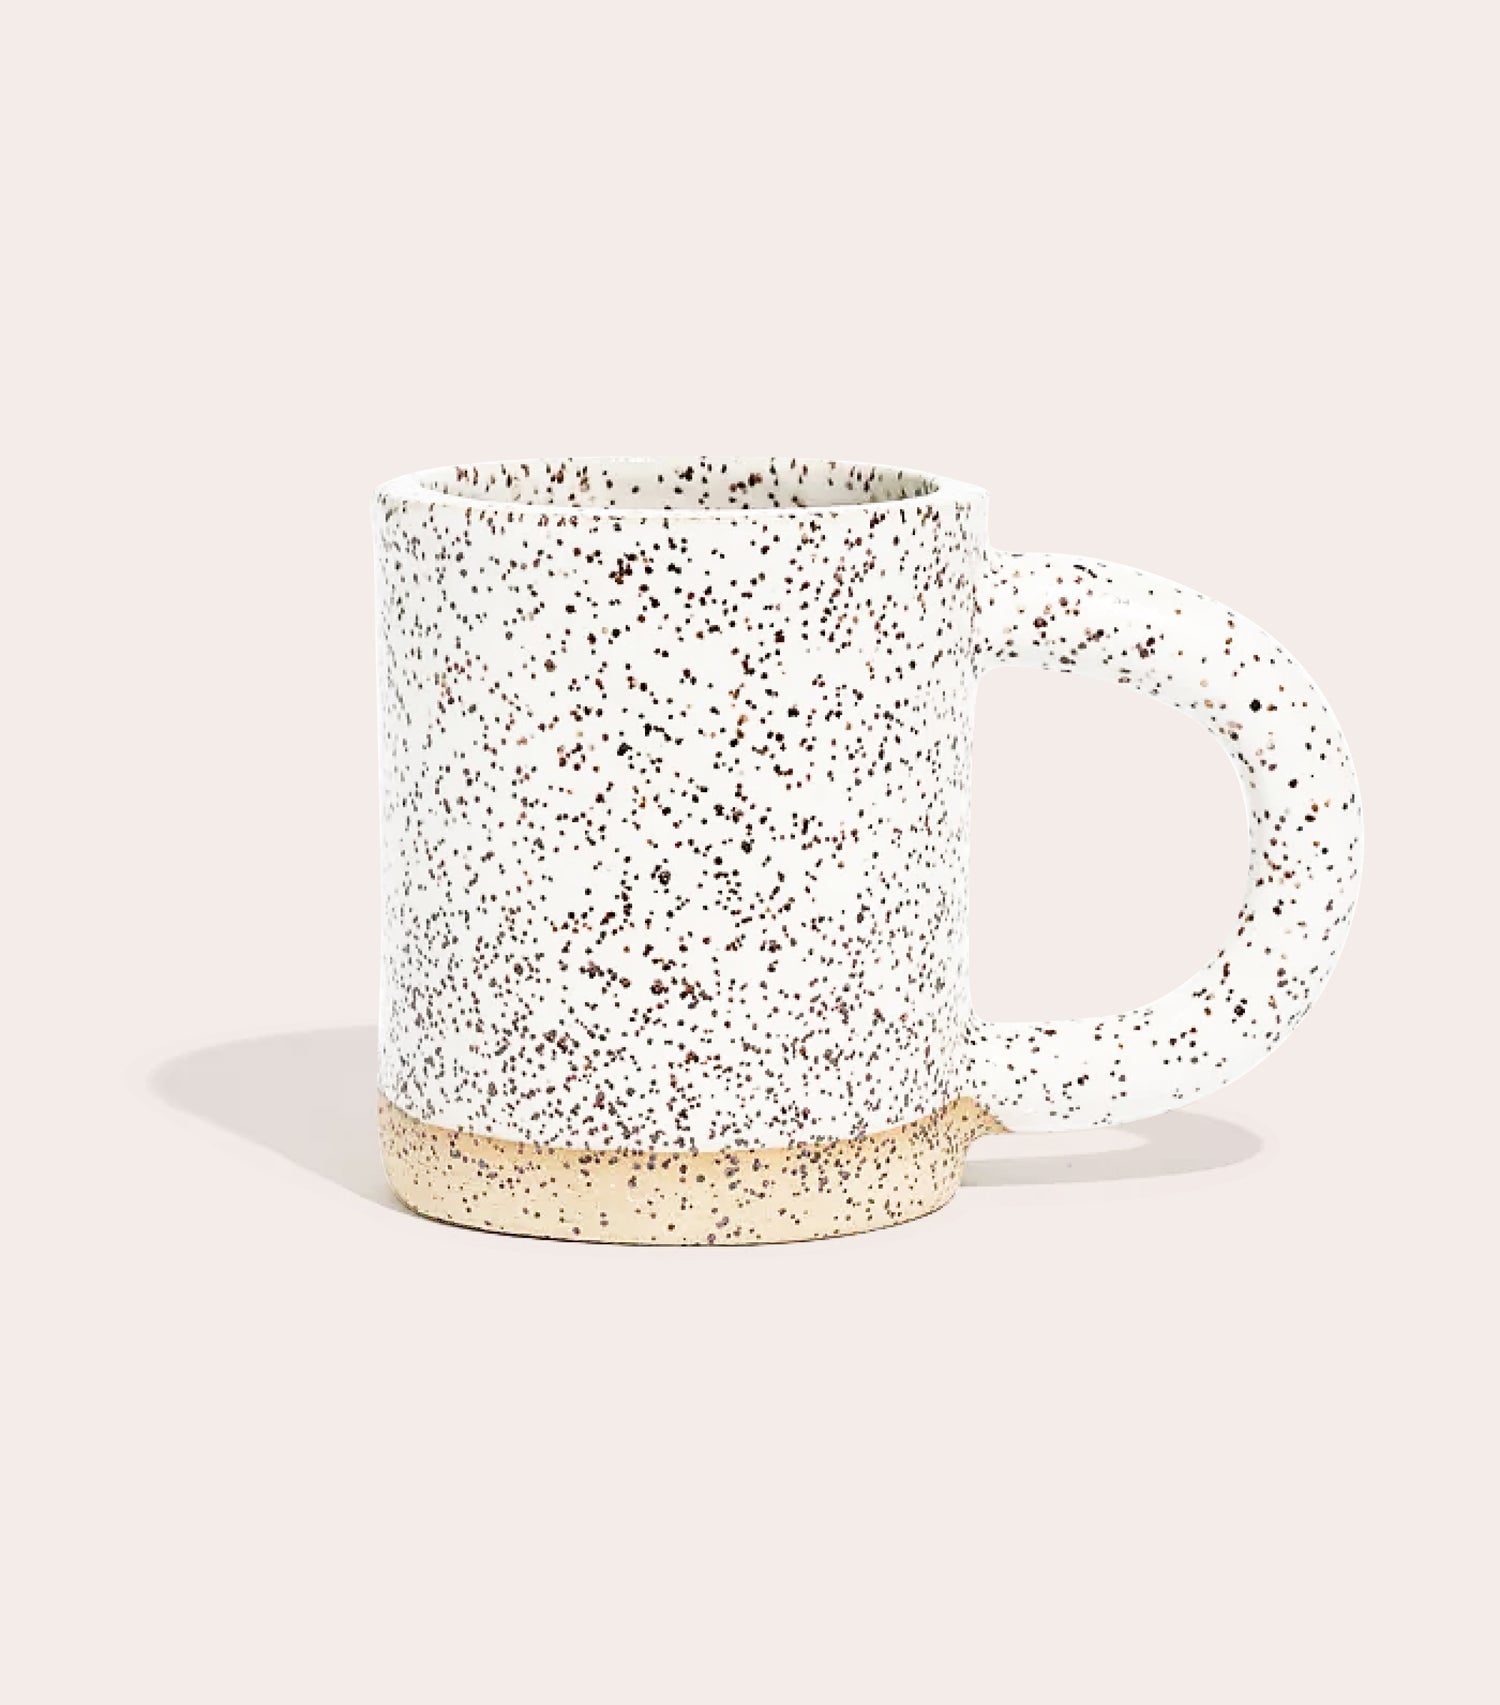 A speckled stoneware mug with a half circular handle. 